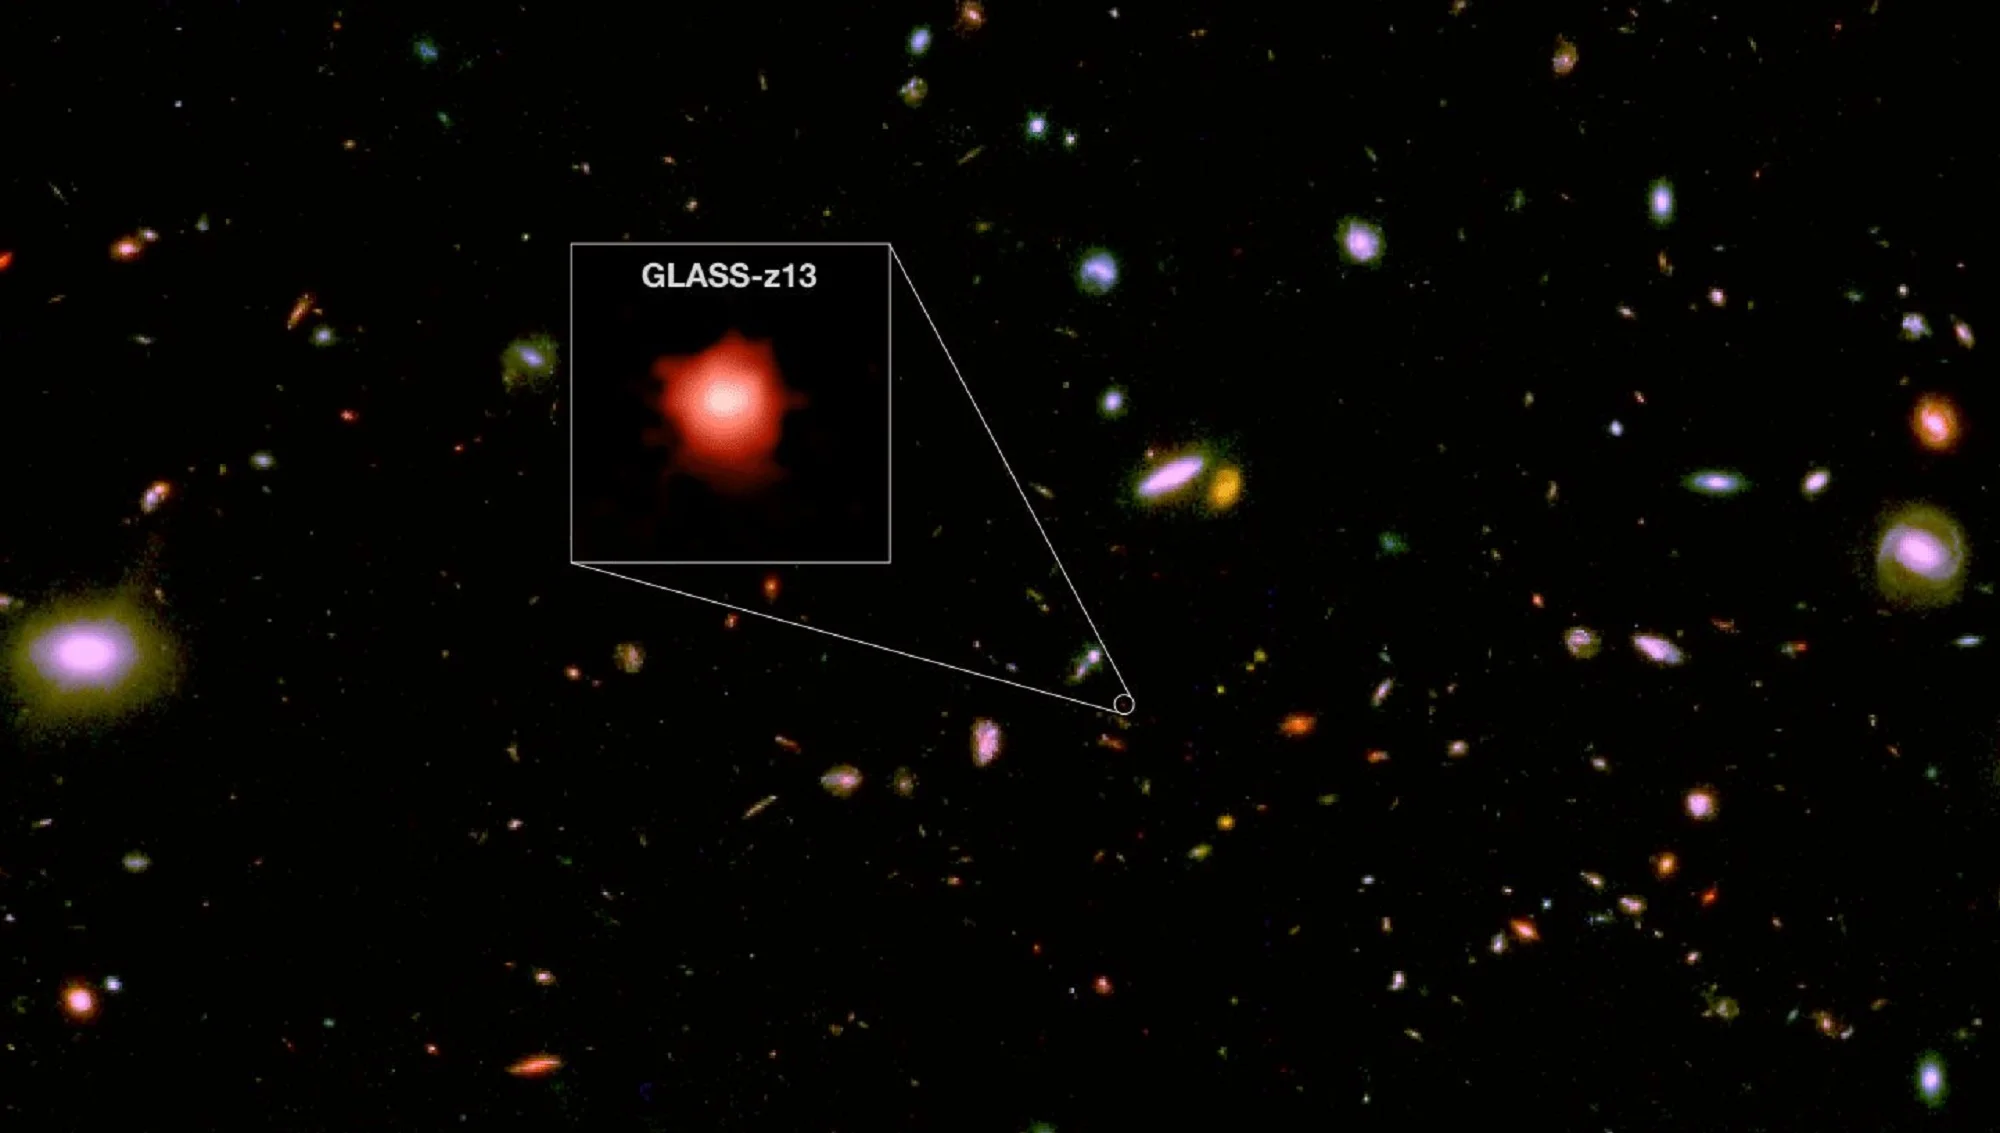 james webb space telescope glass z13 galaxy image